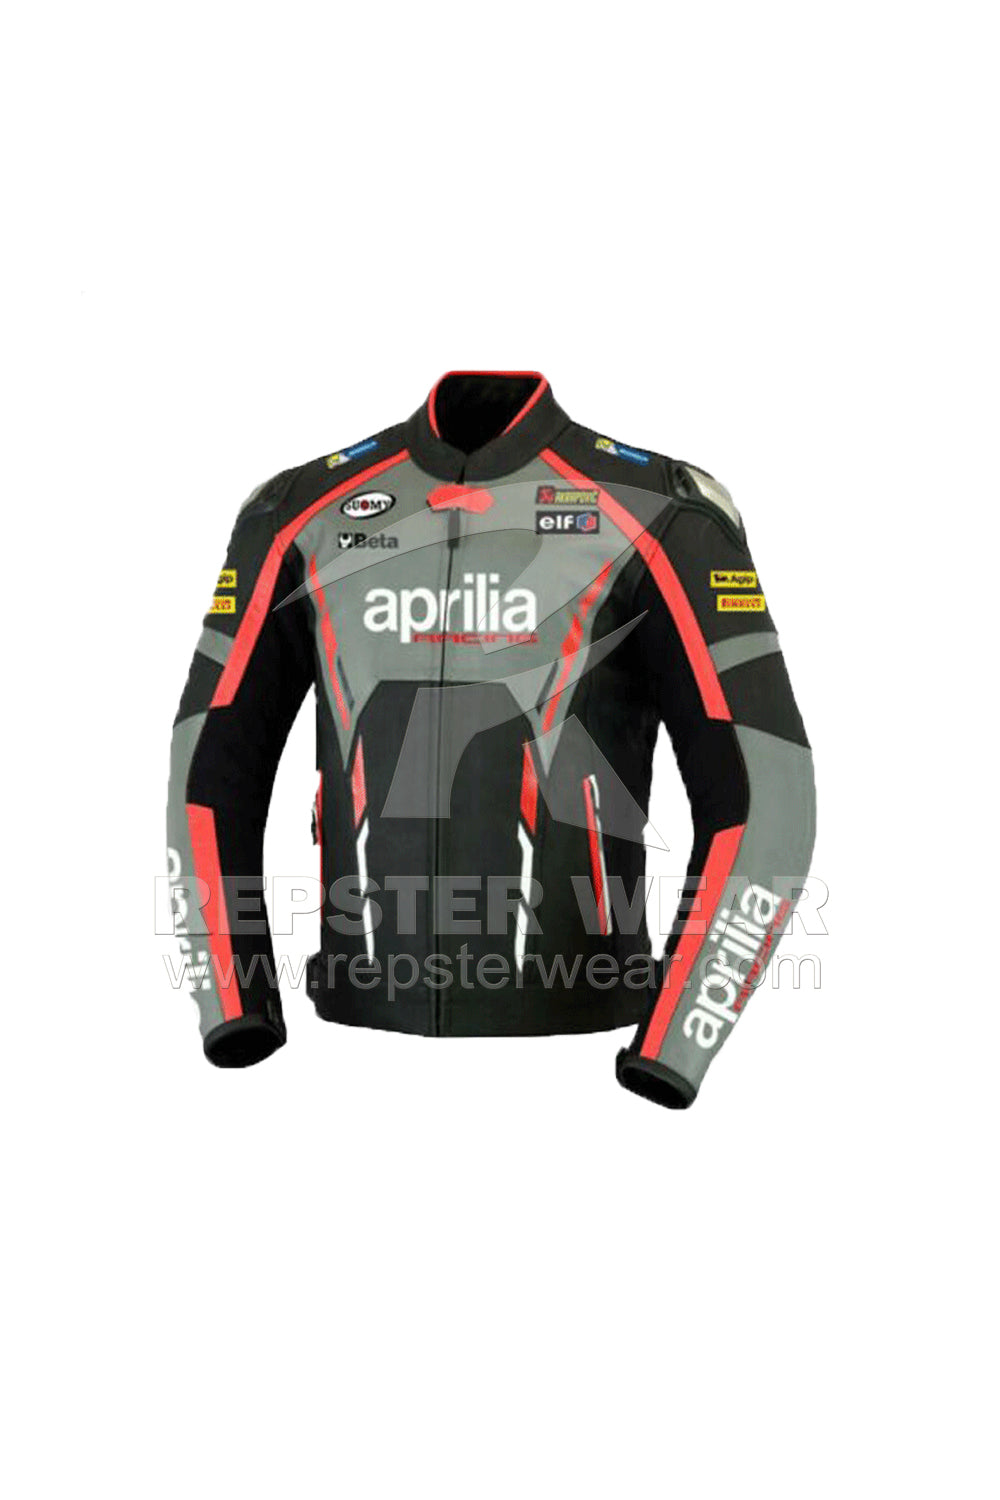 Aprilia Motorbike Jacket 2020 Men / Woman